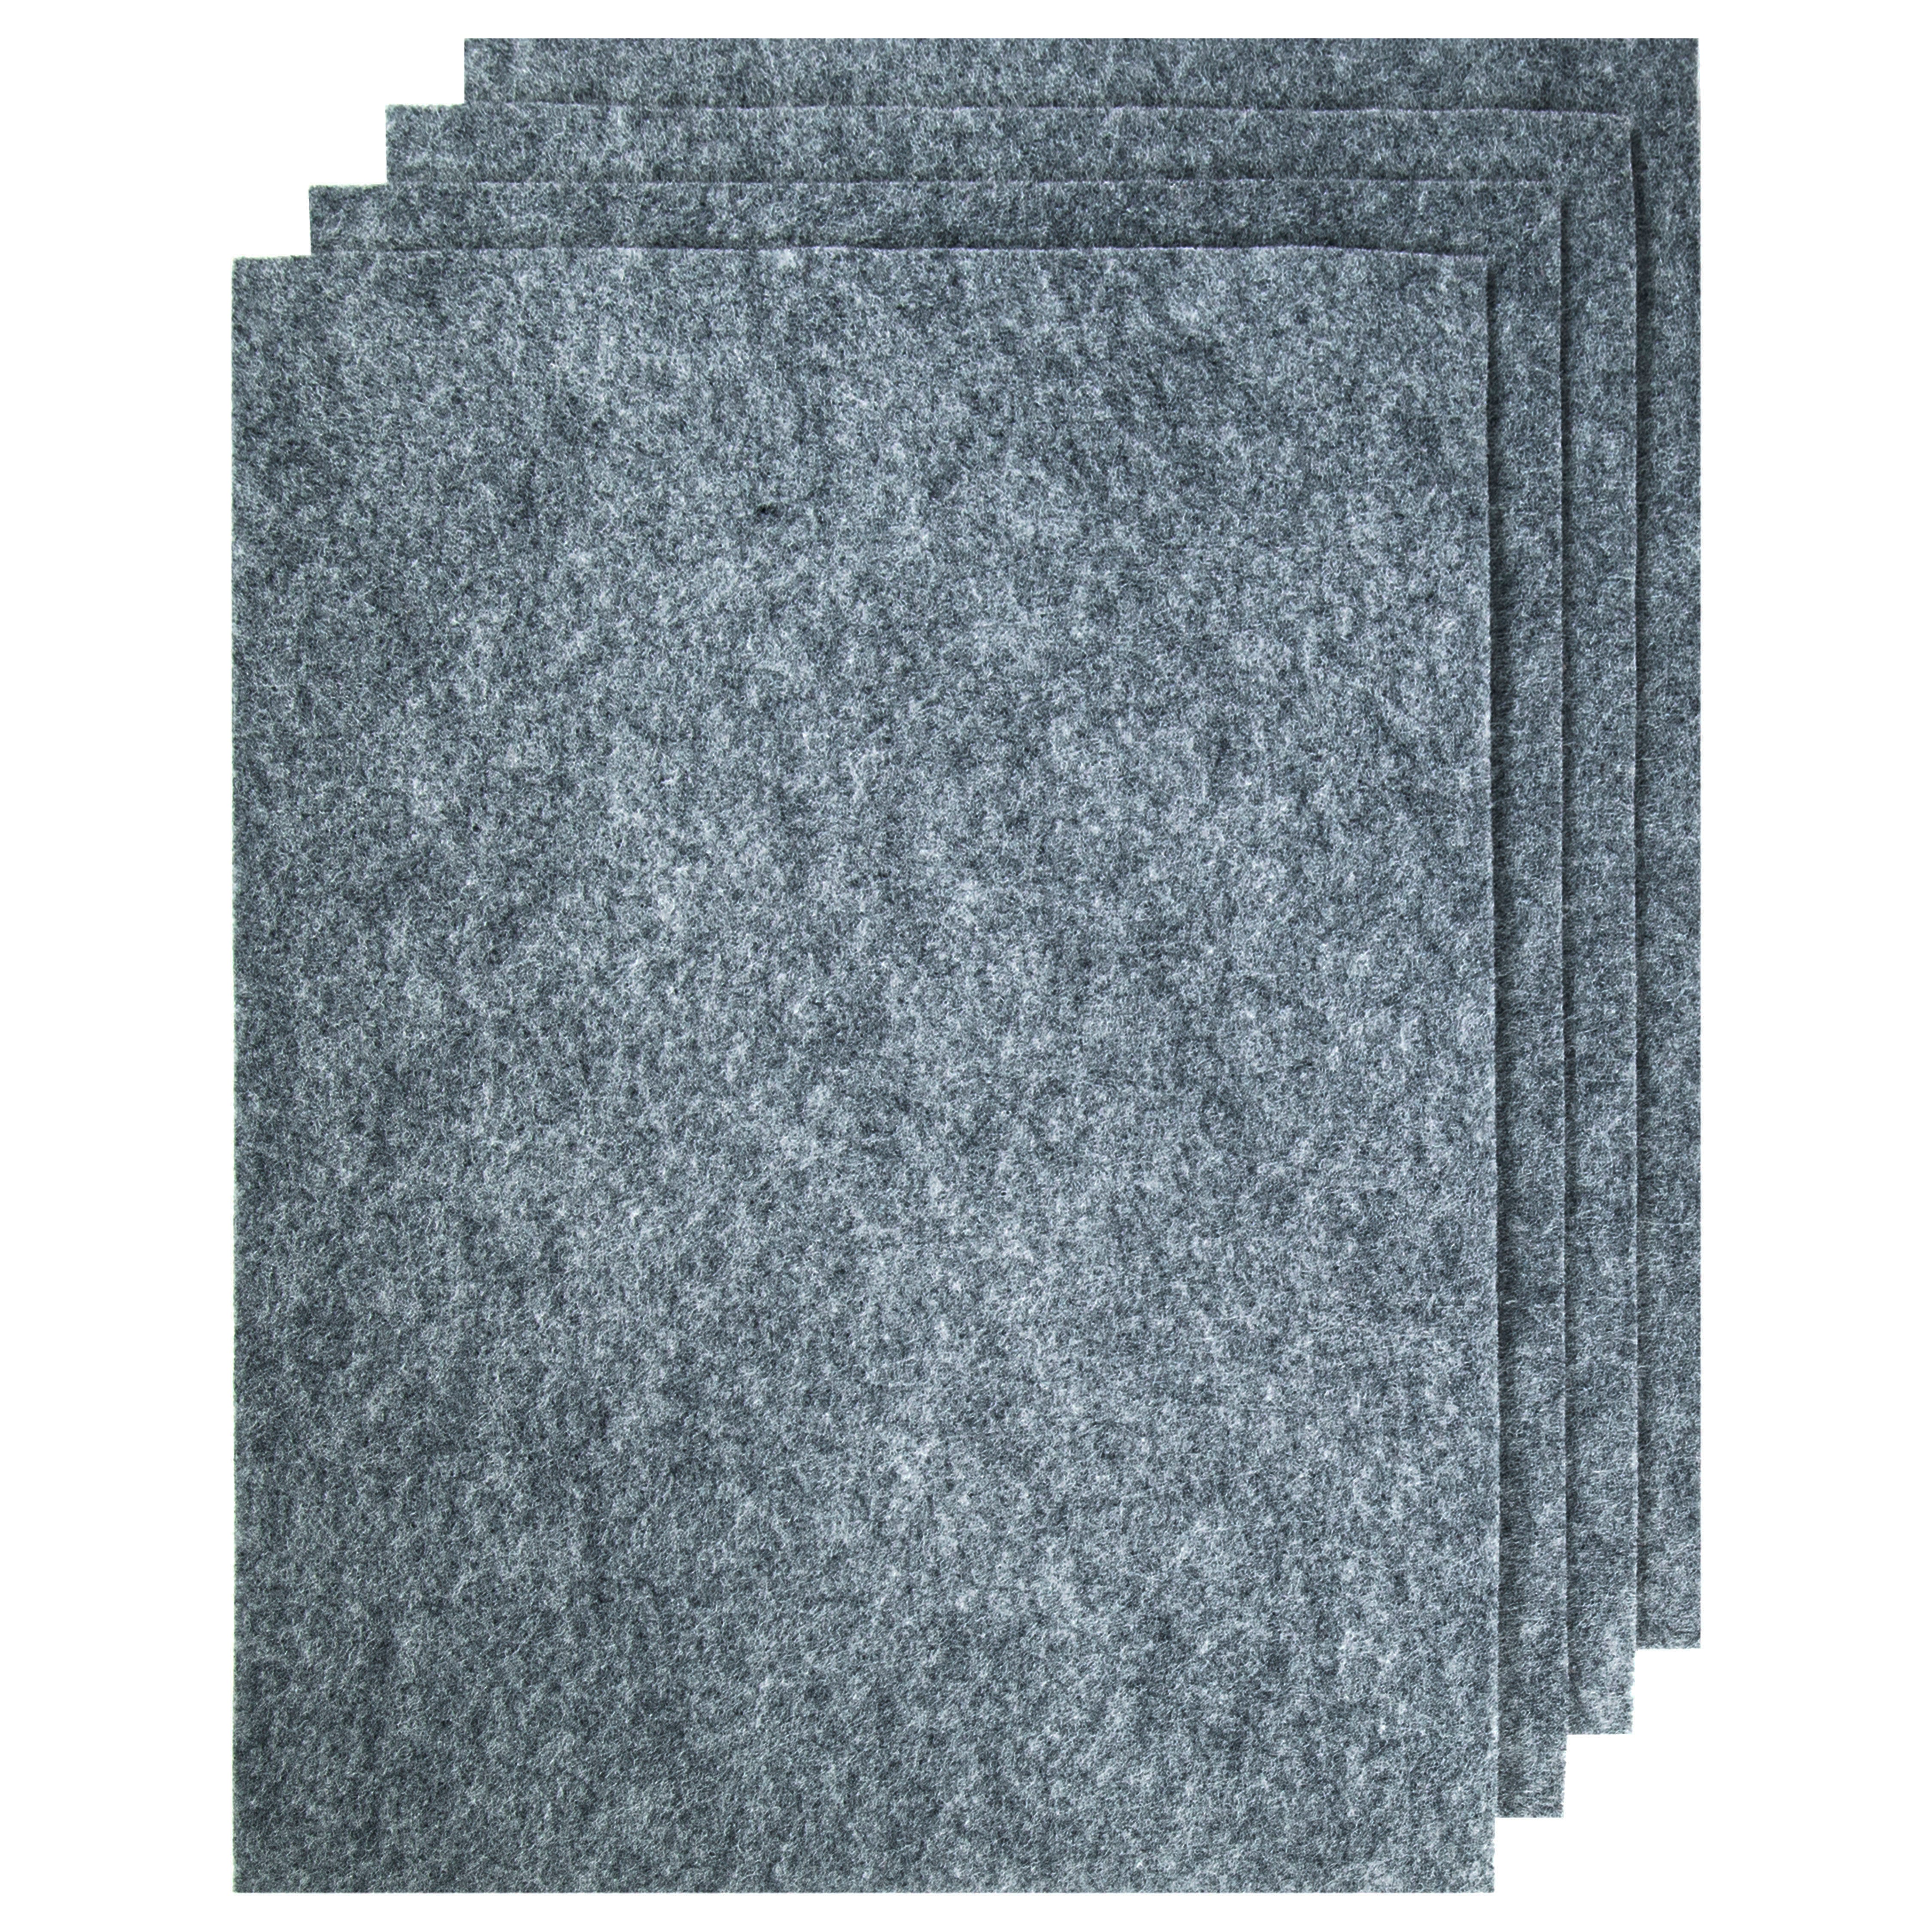 Premium Felt Sheet Fabric Selection - Craft, Decorate & Design with High-Quality Felt Sheets